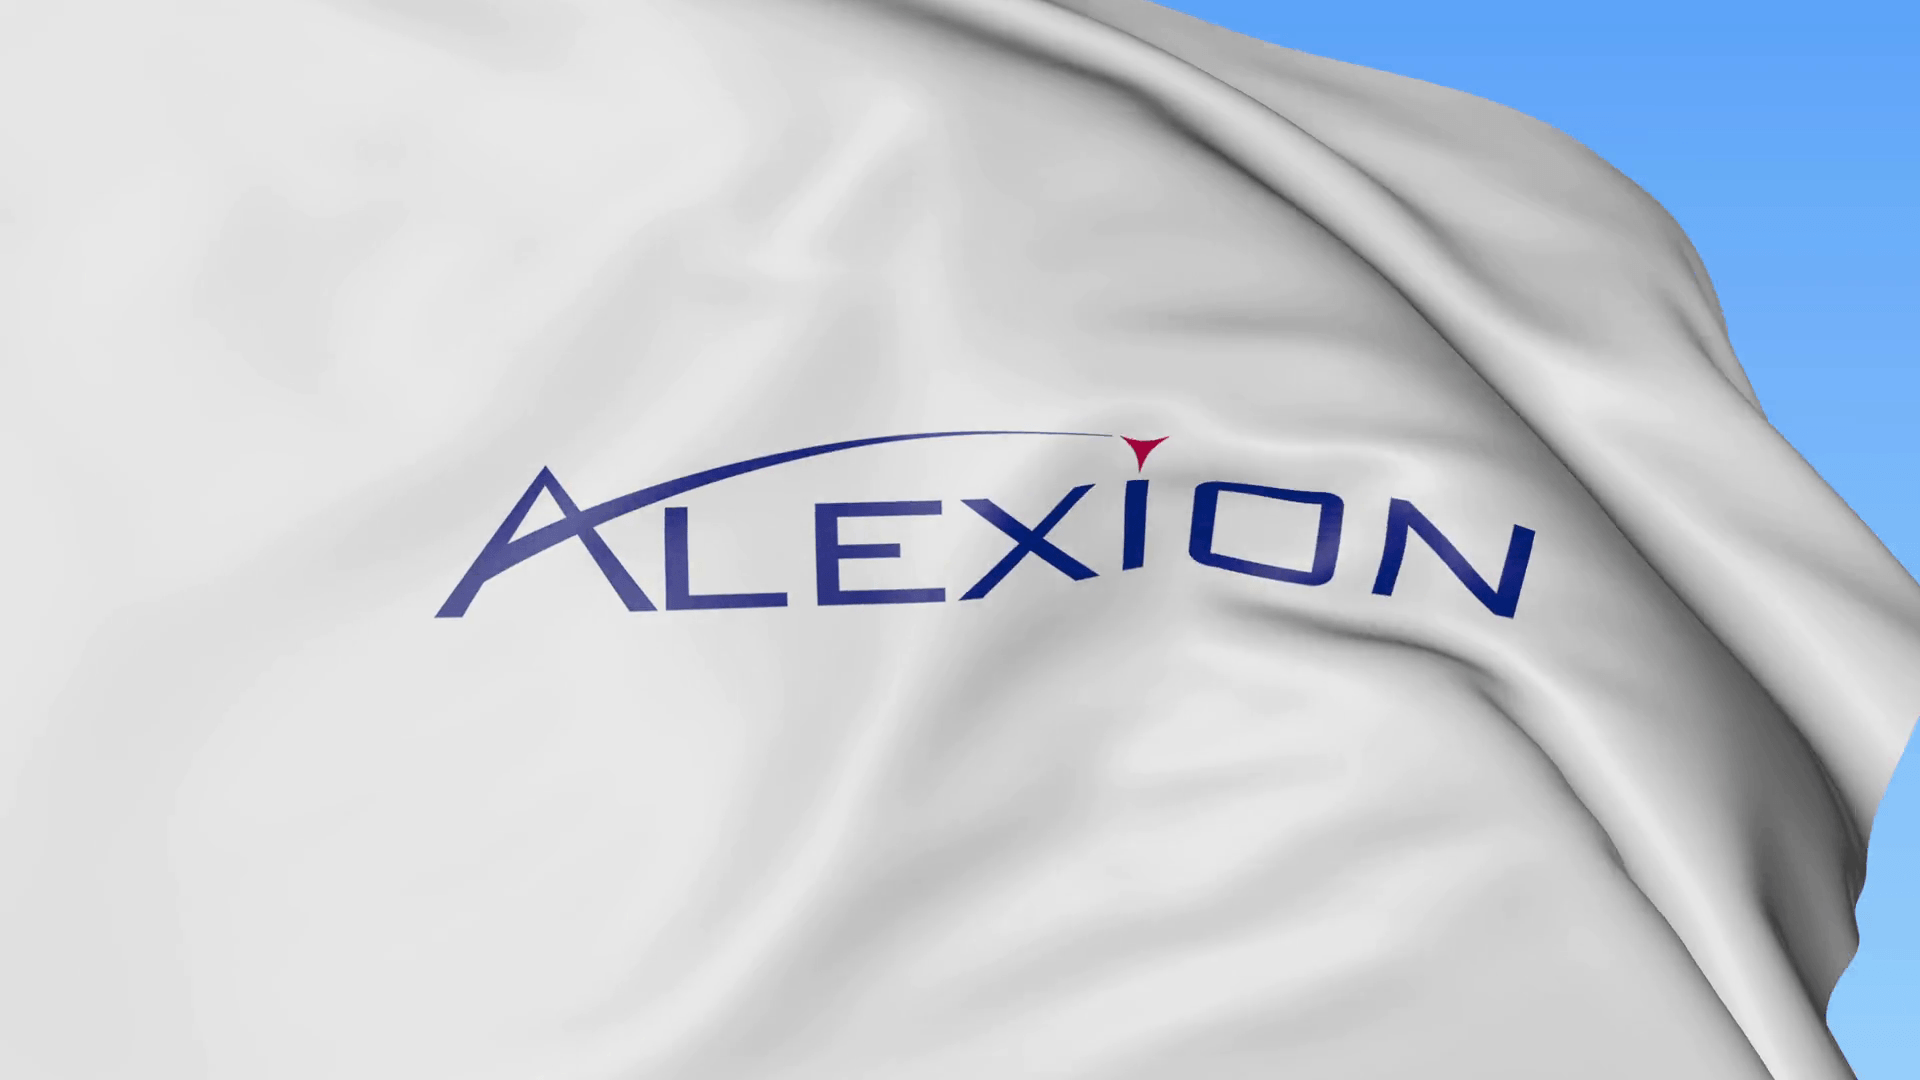 Alexion Logo - Alexion Pharmaceuticals (NASDAQ:ALXN) Stock Consolidating - Live ...